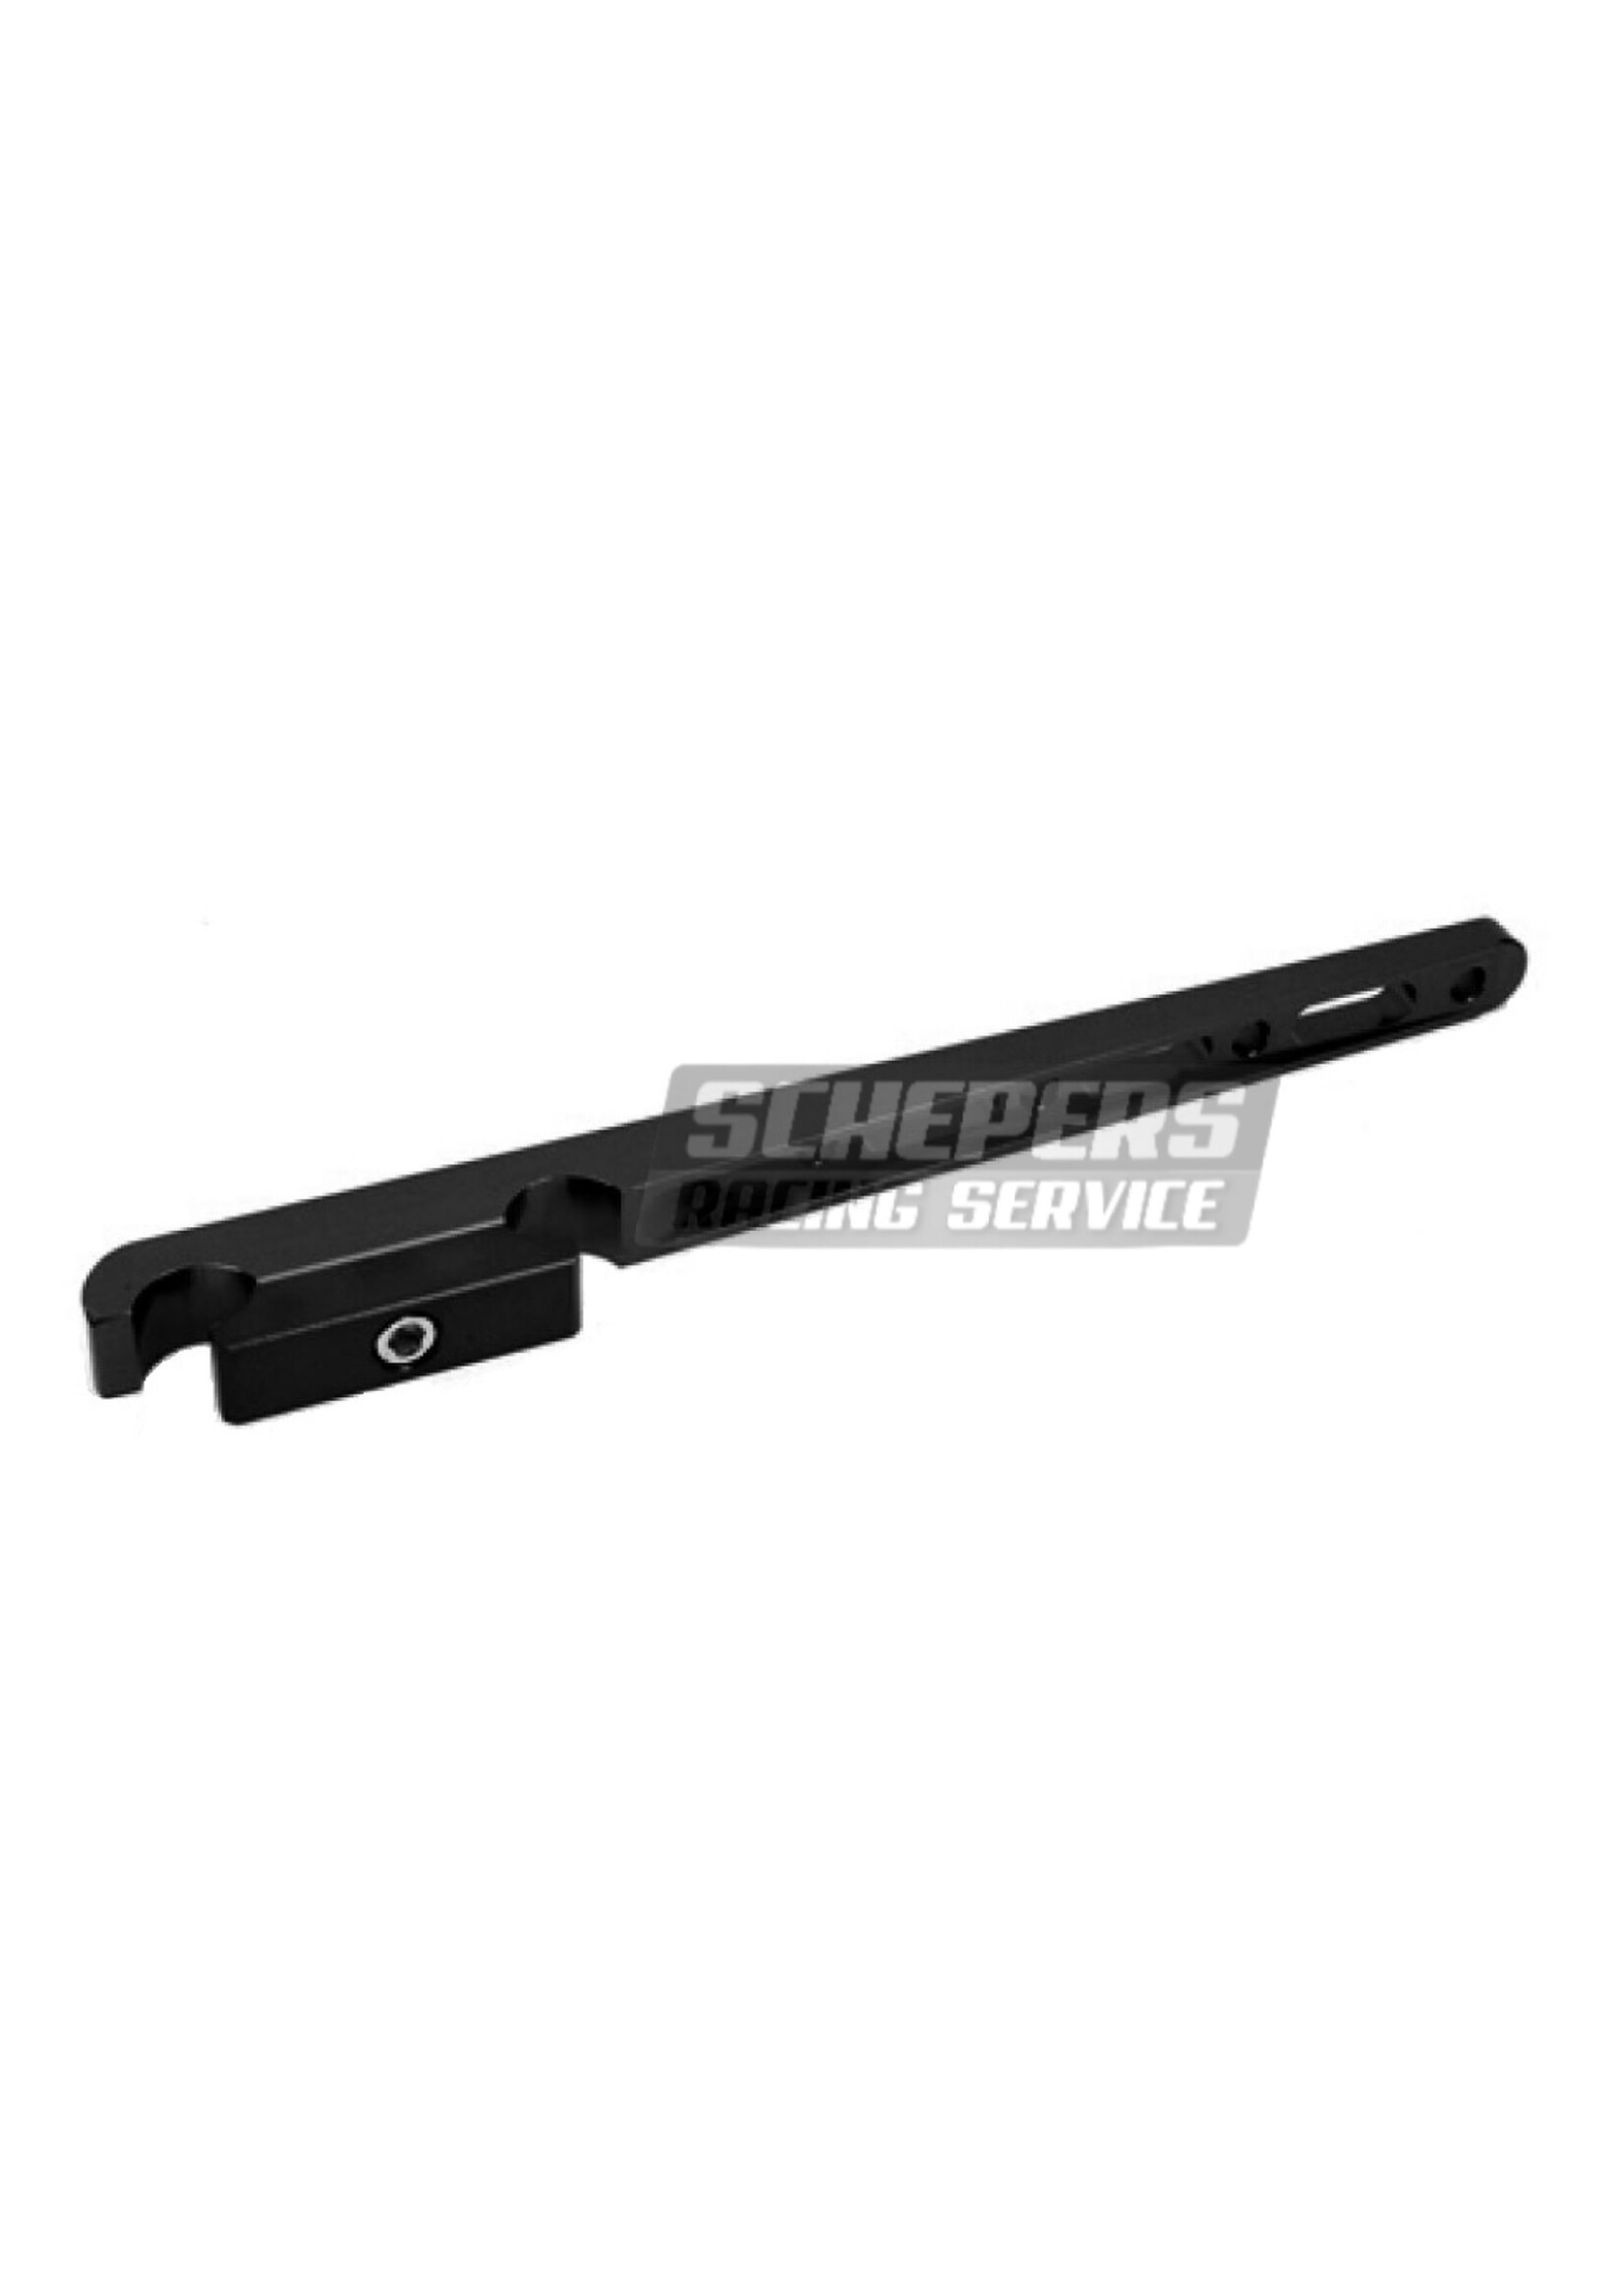 Universal Parts Black Aluminum Support Bar, for KZ Silencer